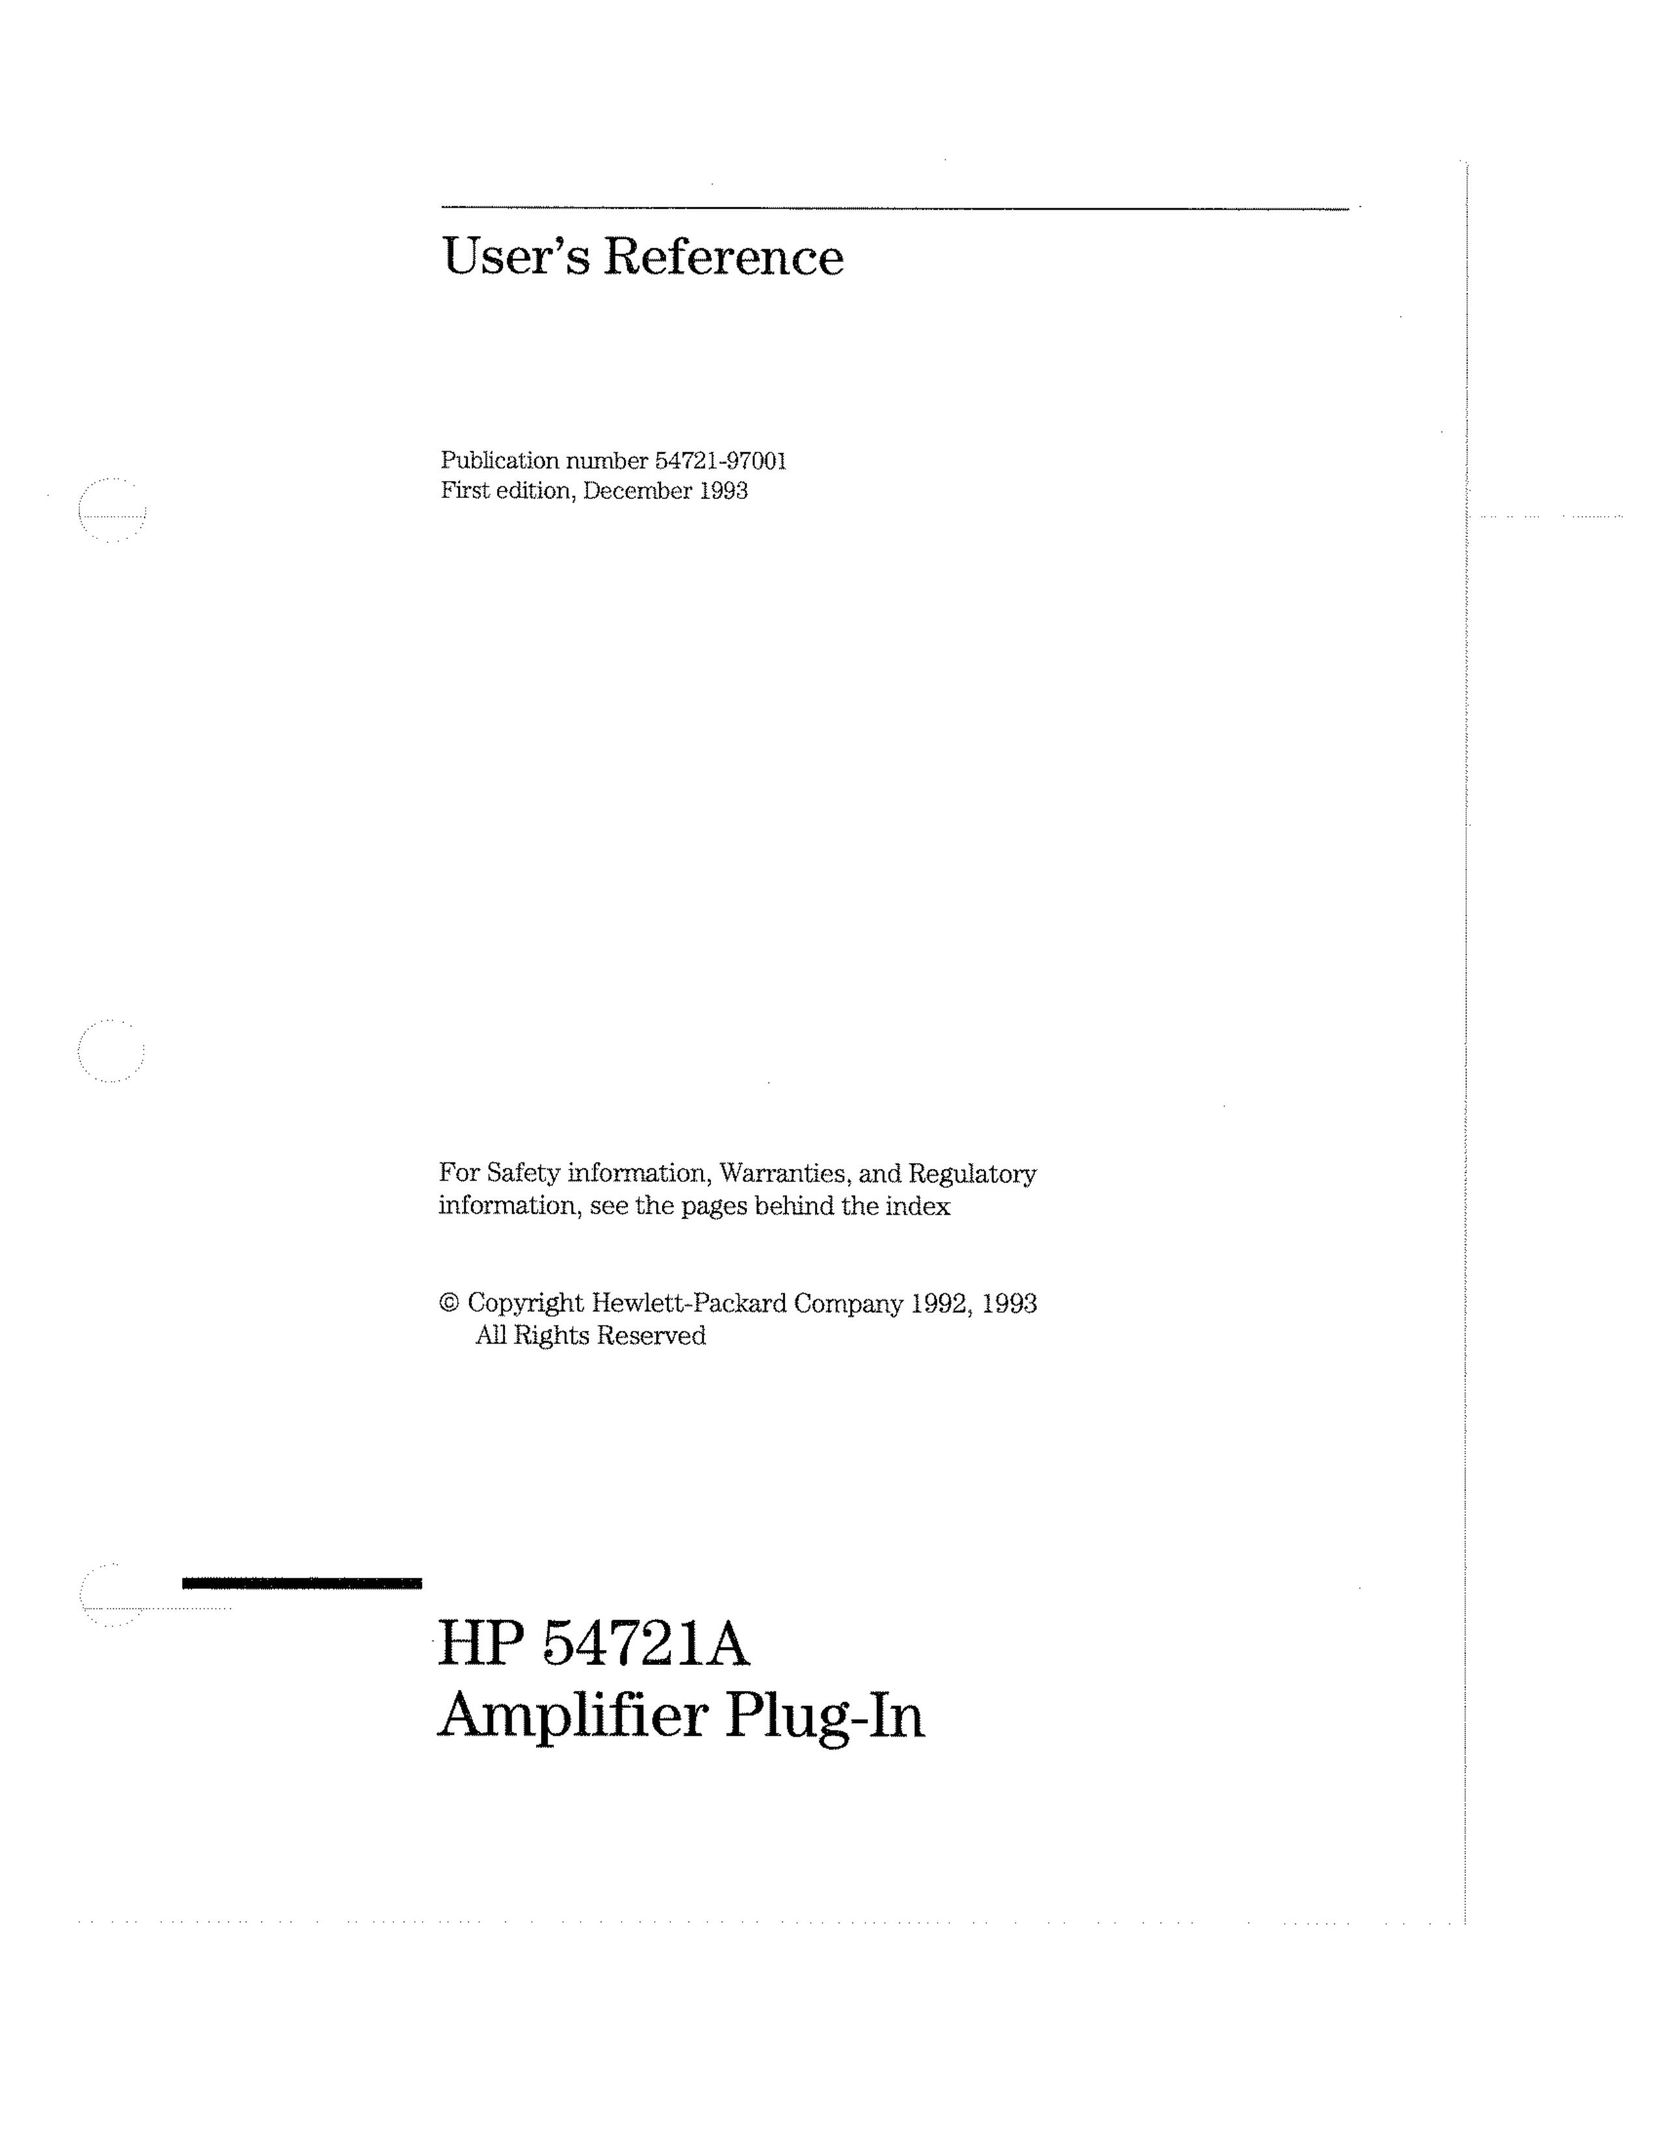 HP (Hewlett-Packard) HP54721A Car Amplifier User Manual (Page 1)